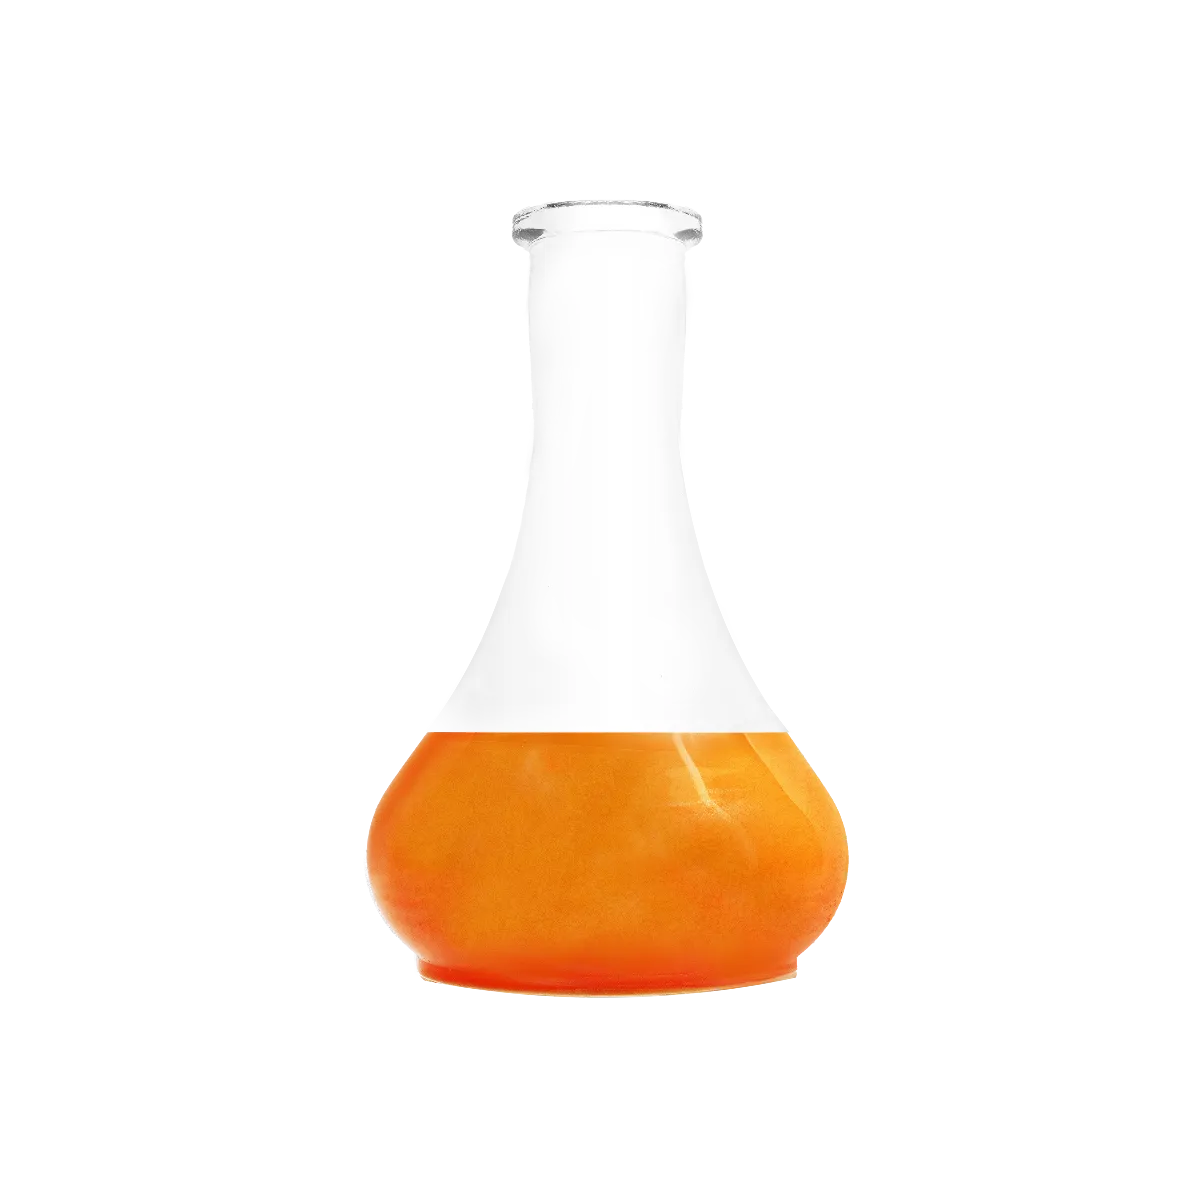 X-Schischa Shisha Bowl F?rbemittel Candy Colour Orange